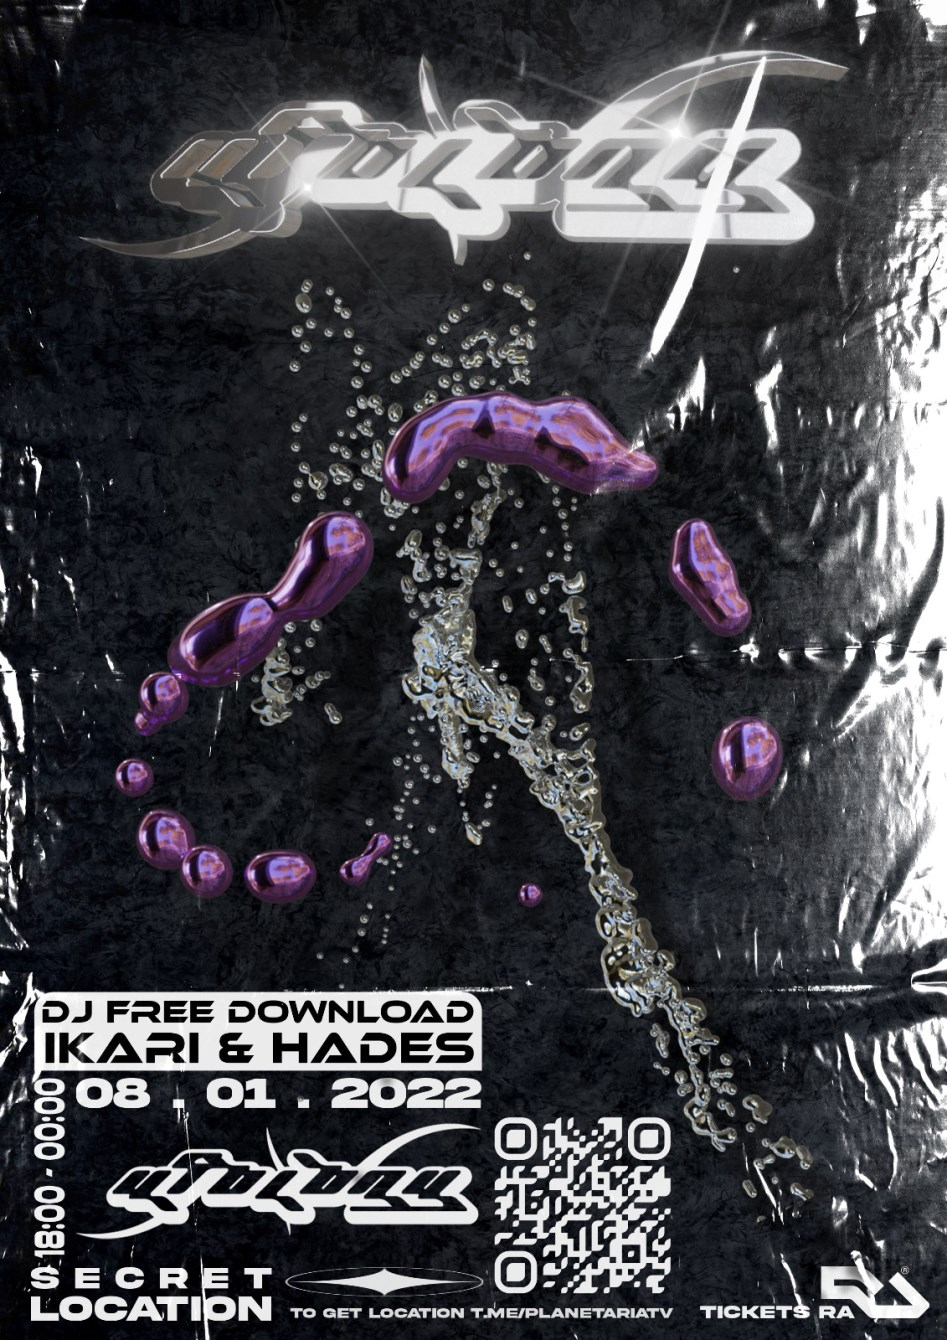 Ufology #24 with Dj Free Download, Ikari & Hades - Flyer front